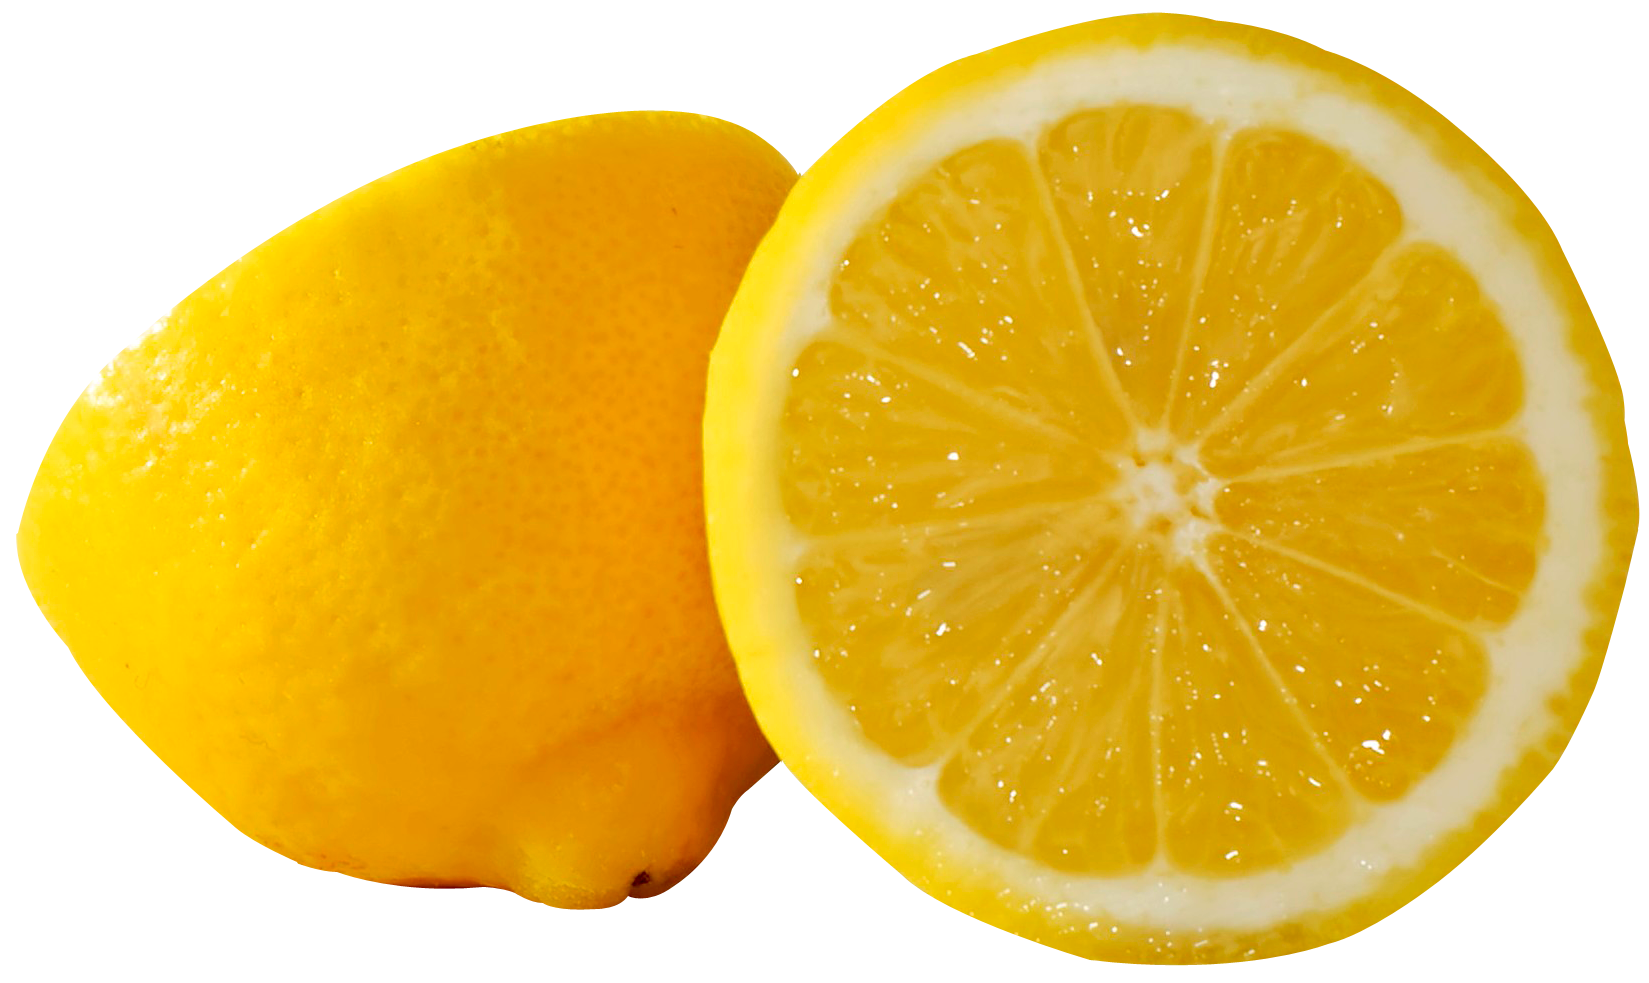 Lemon PNG Image - PurePNG | Free transparent CC0 PNG Image Library